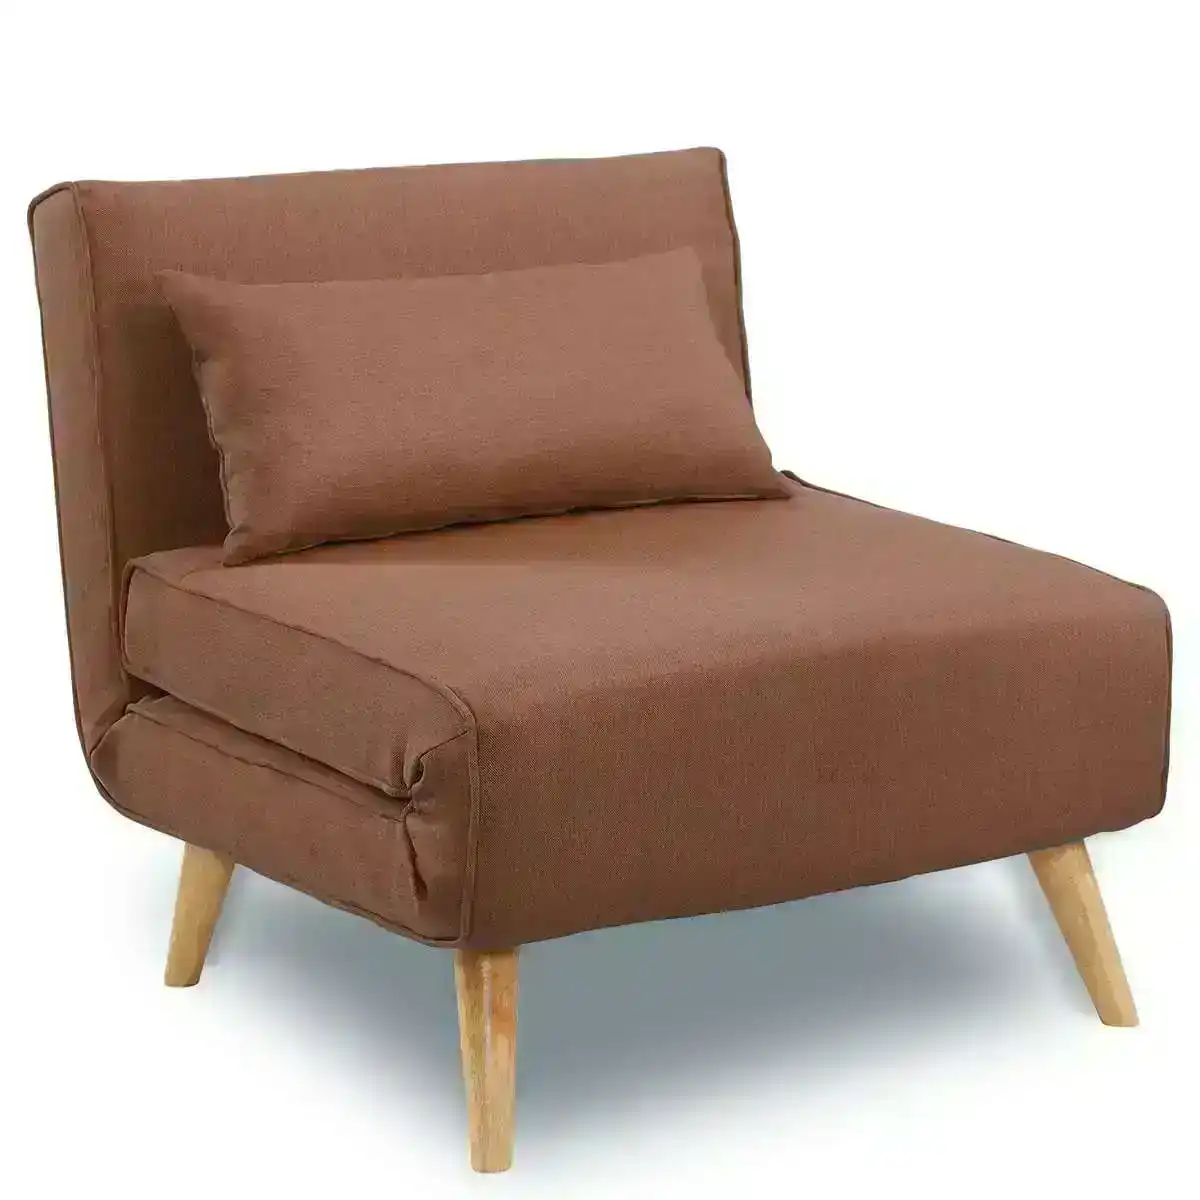 Adjustable Corner Sofa Single Seater Lounge Linen Bed Seat   Brown